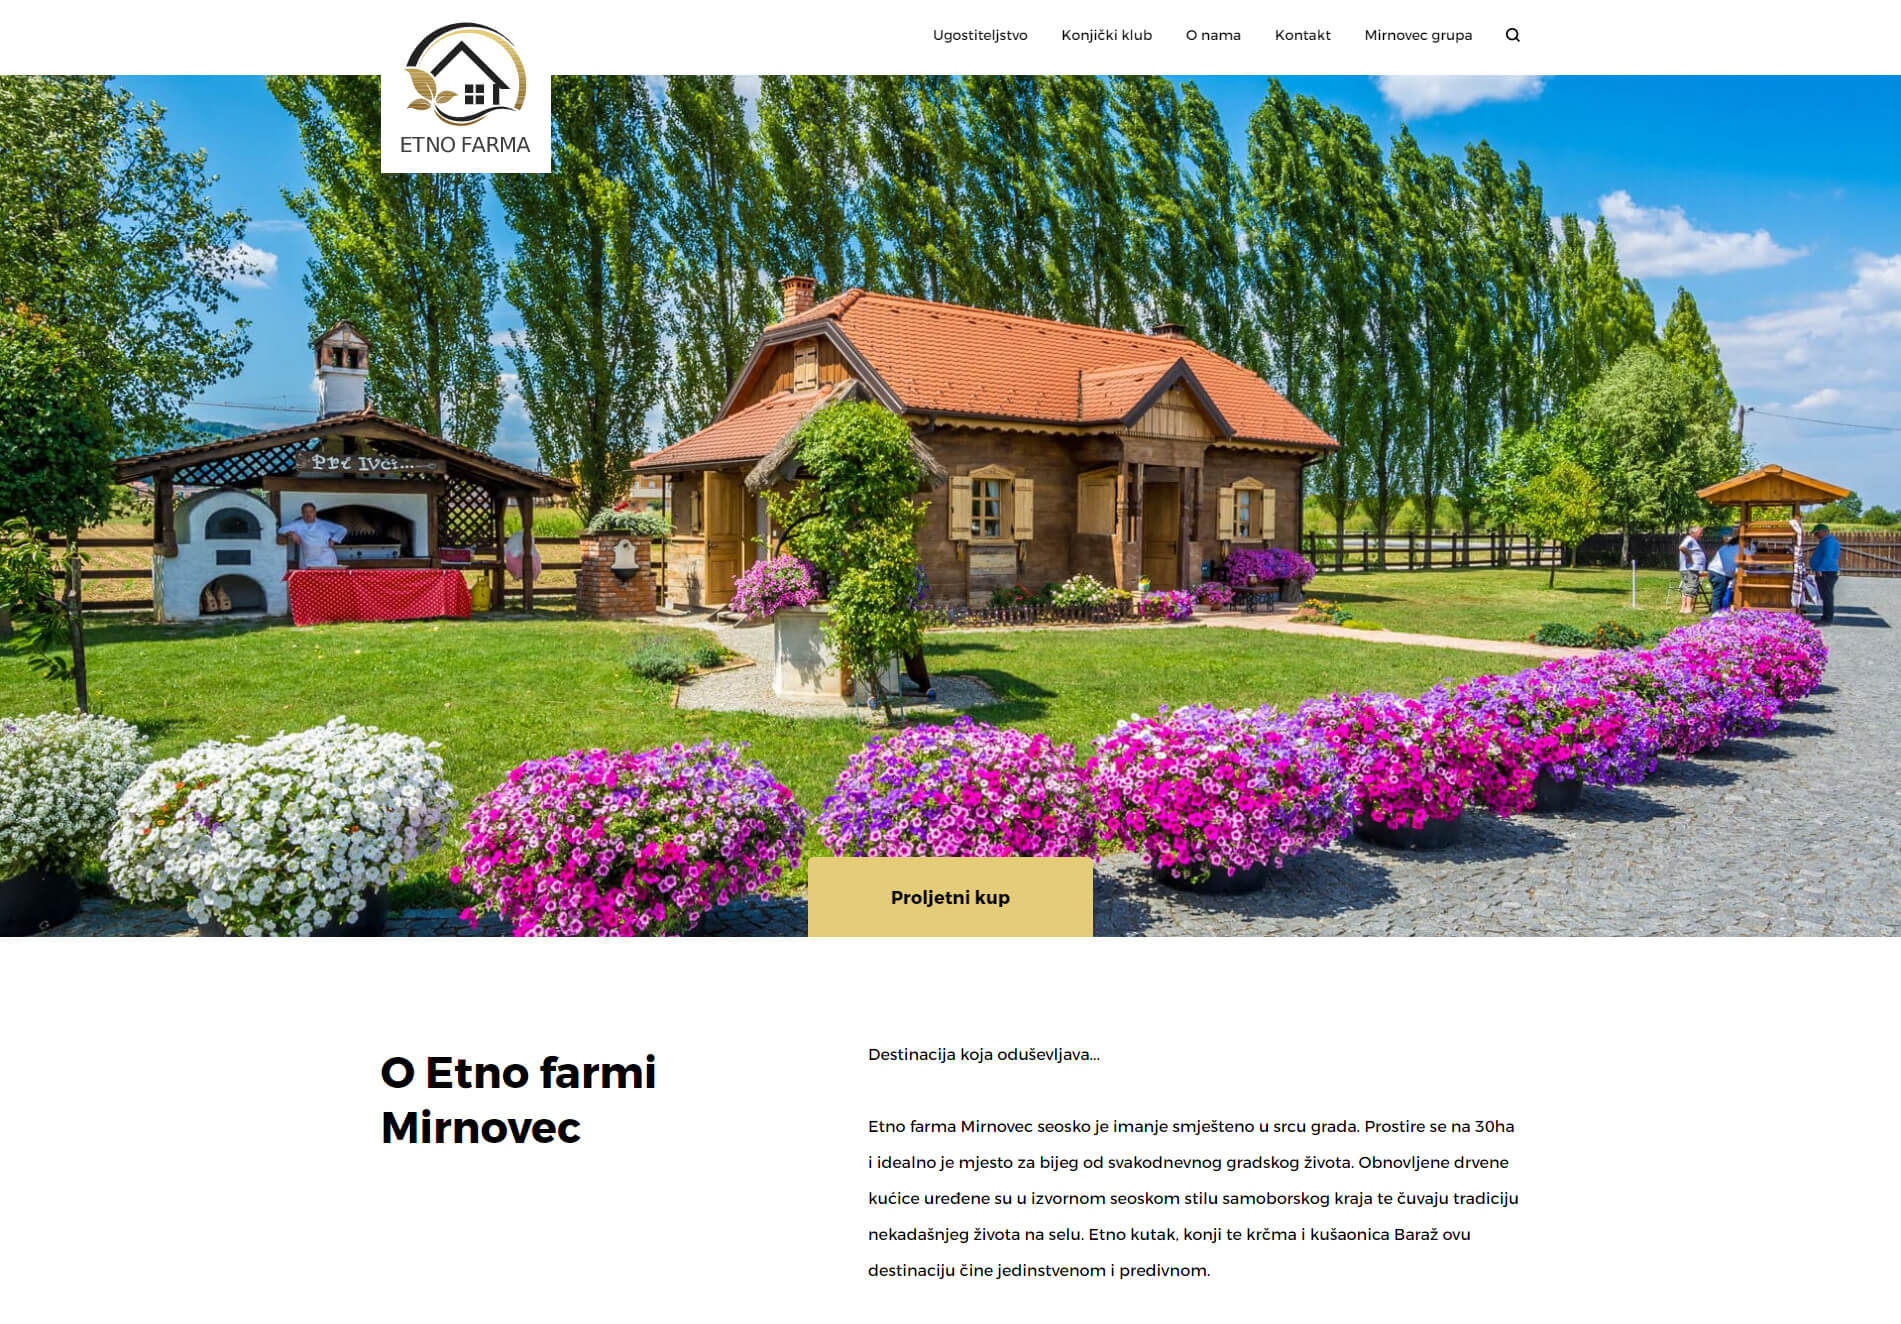 Ethno farm Mirnovec